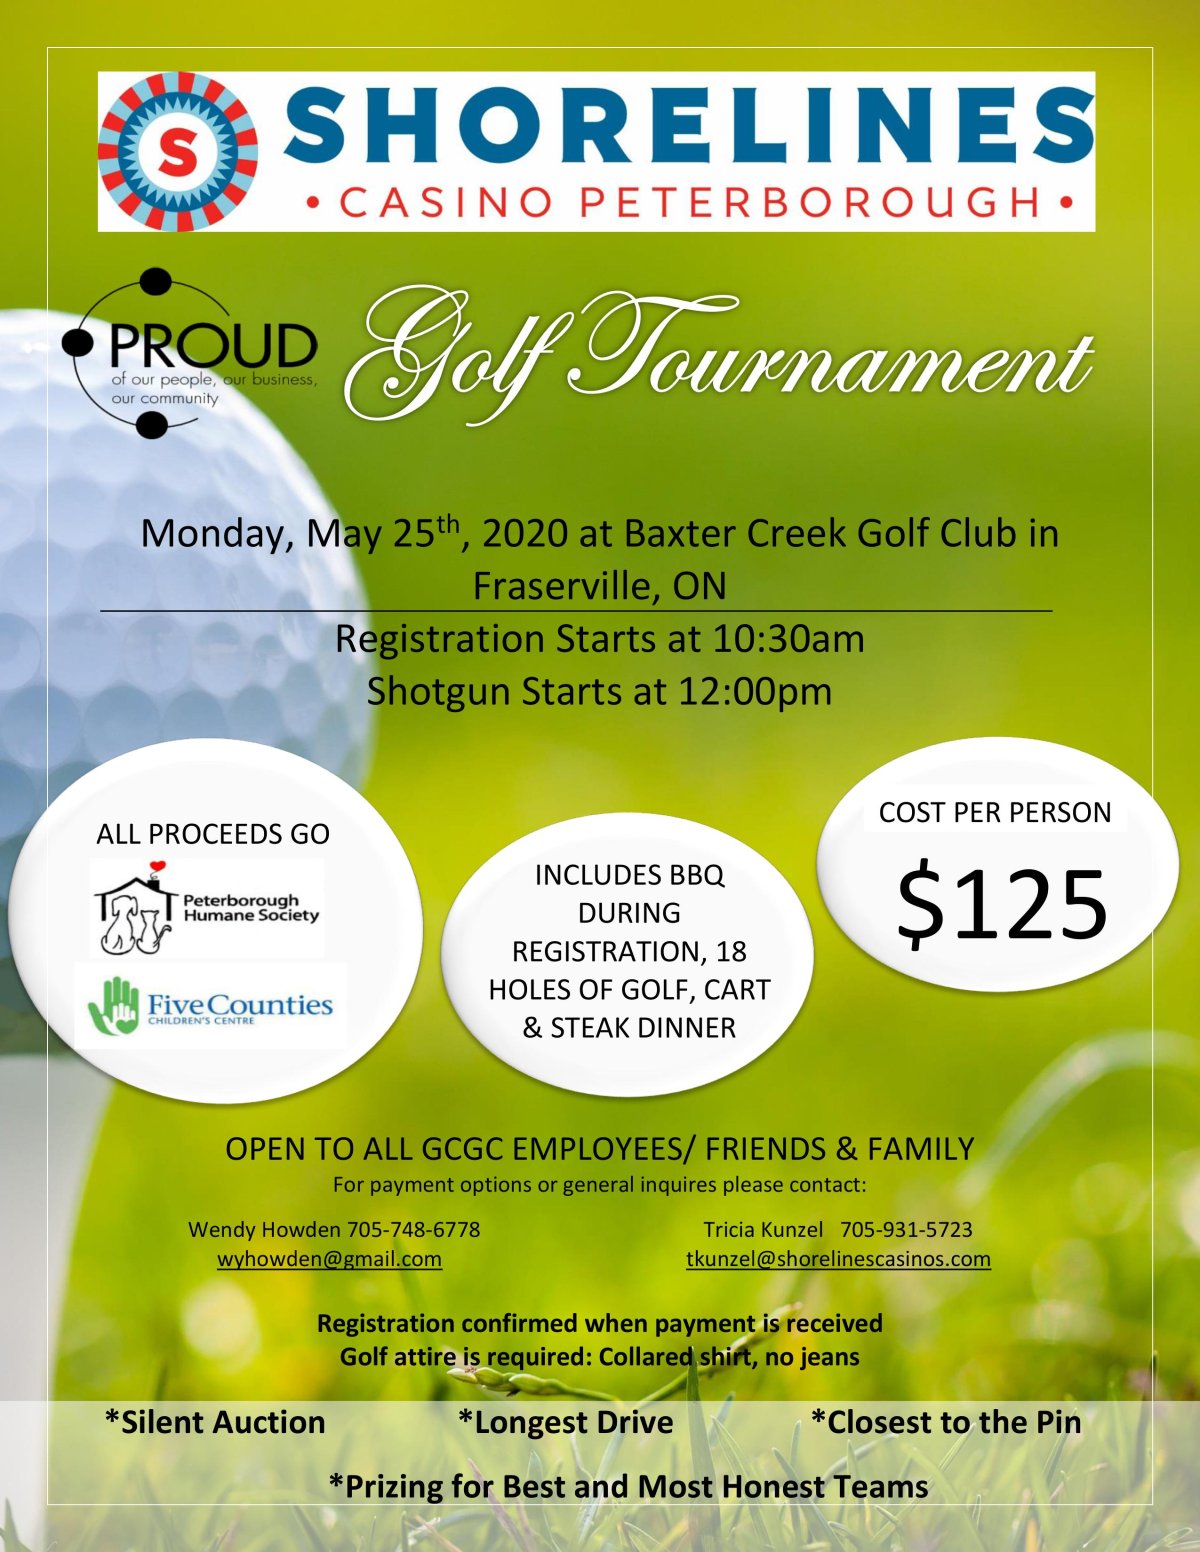 Shorelines Casino Peterborough Charity Golf Tournament - image